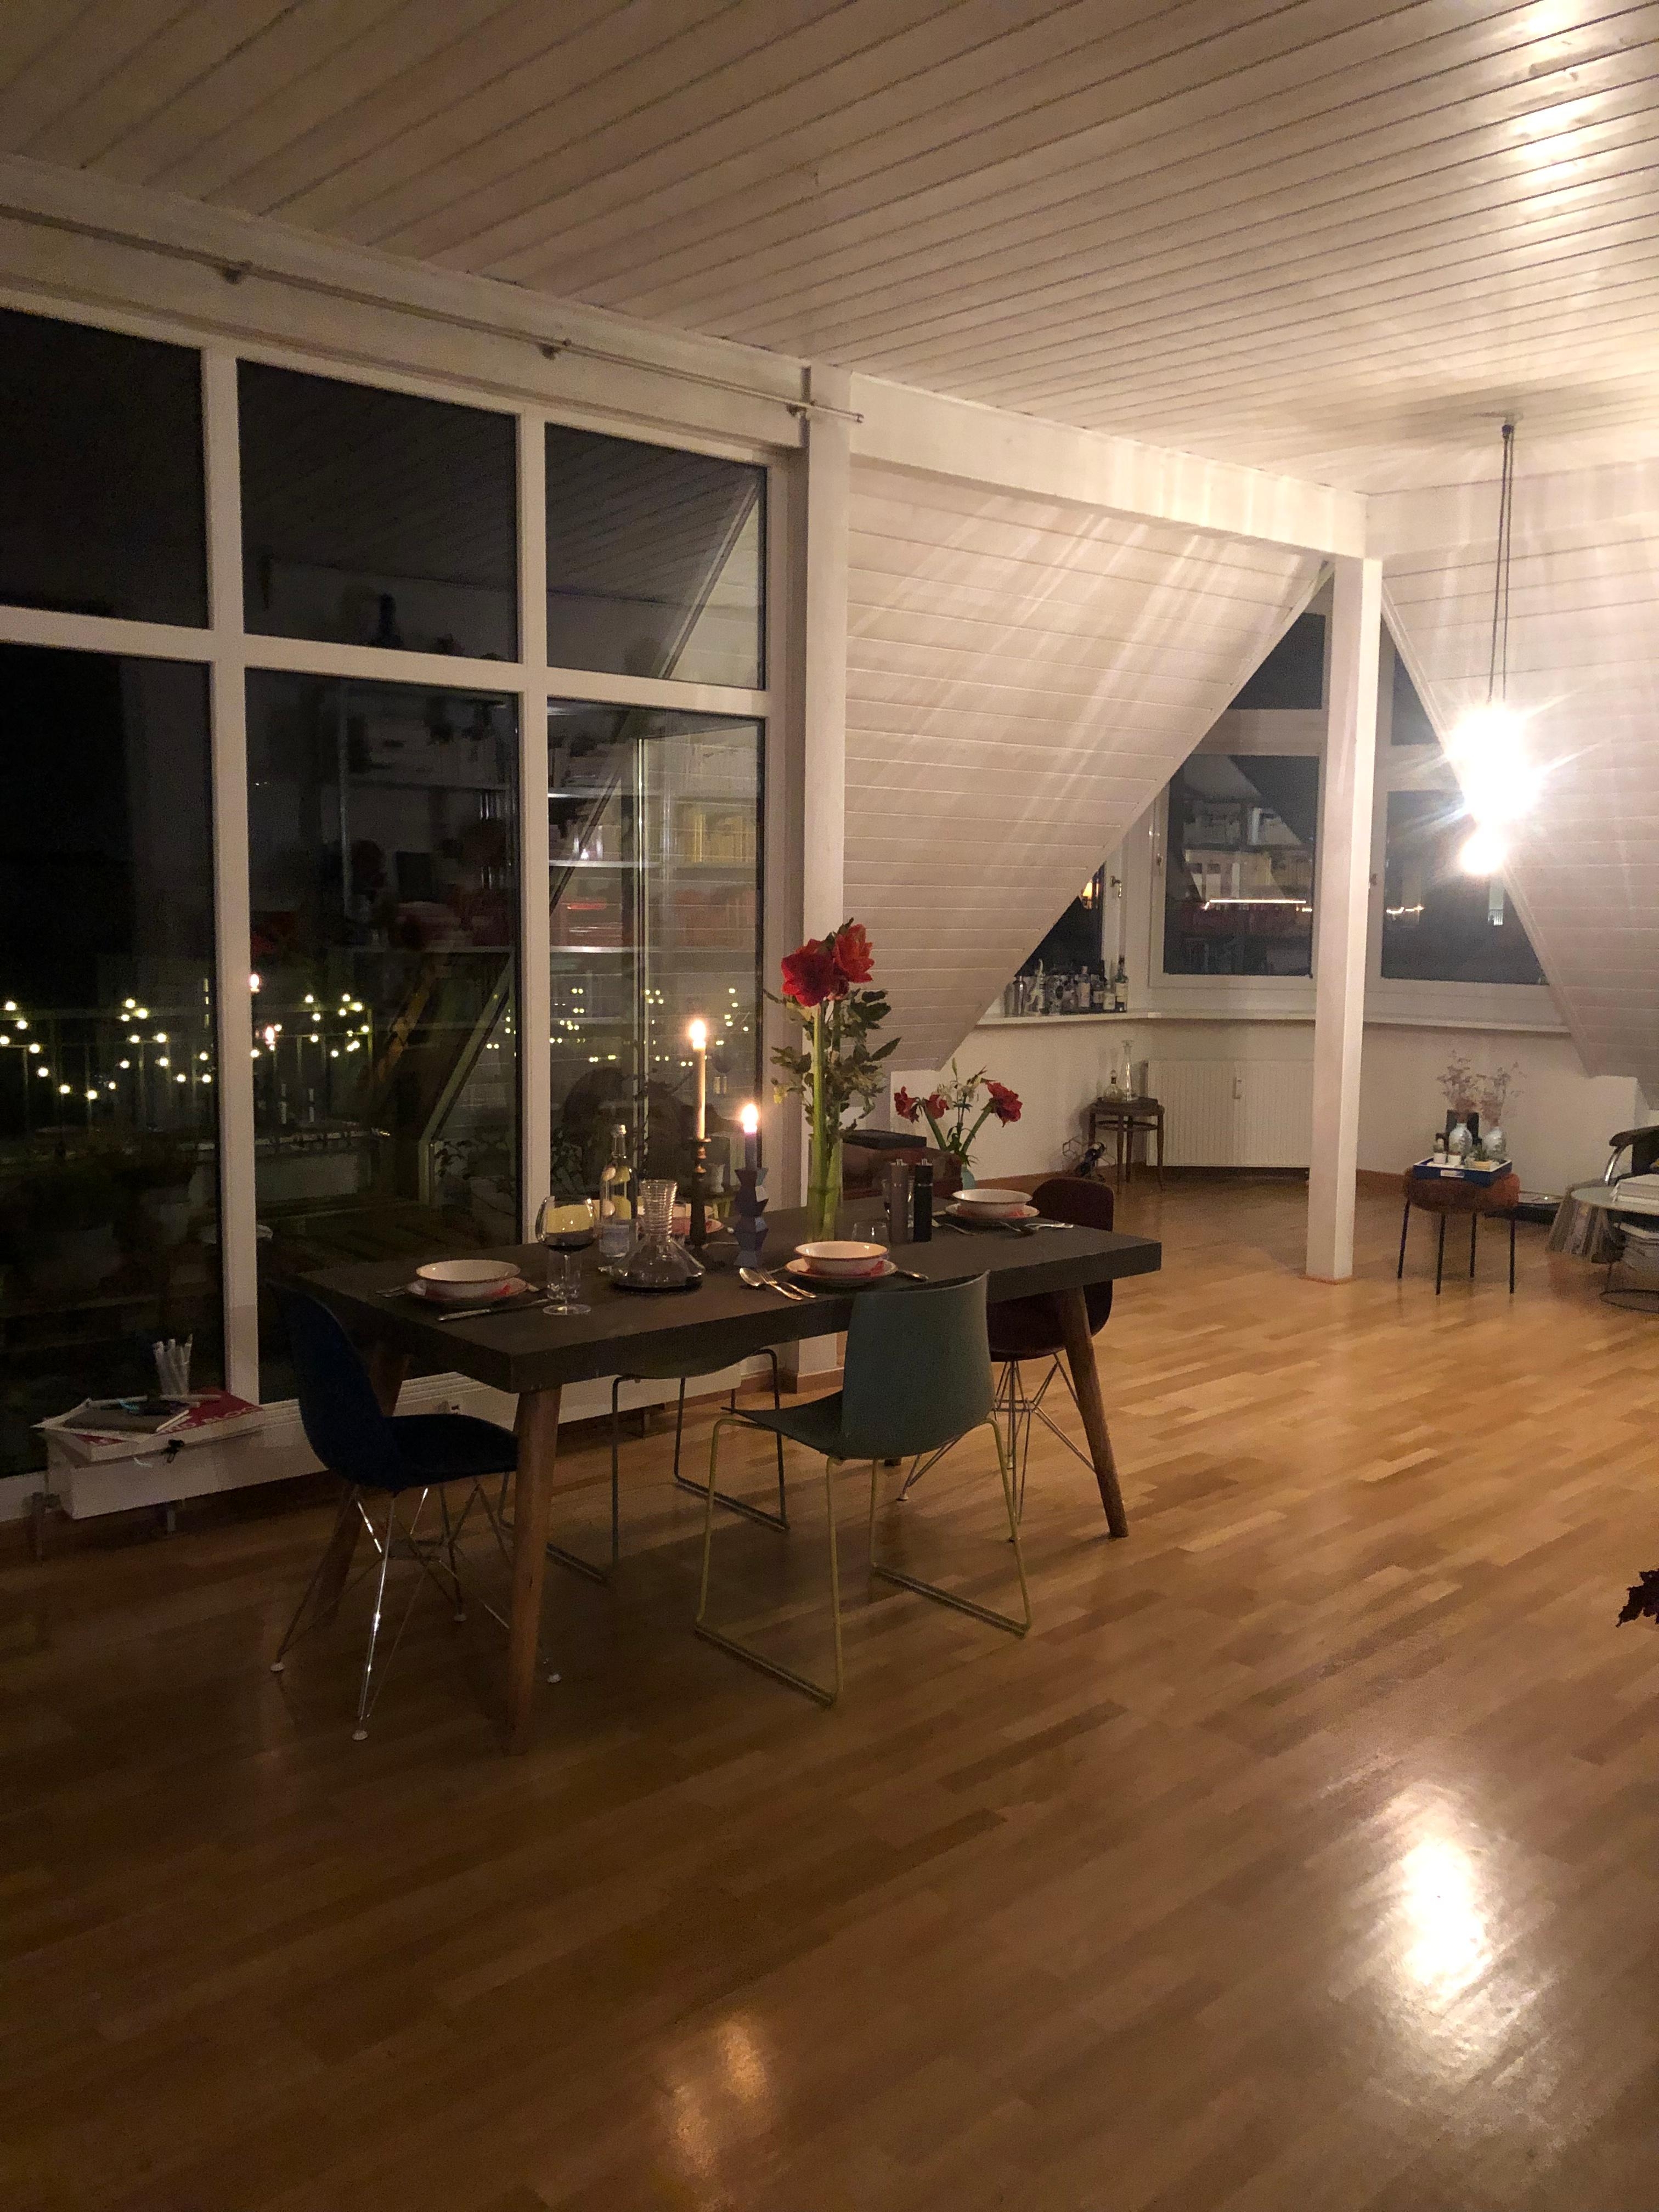 Last night’s impression. 💐 #dinner #home #berlin #design #interior #furniture #cook #livingroom #wohnzimmer